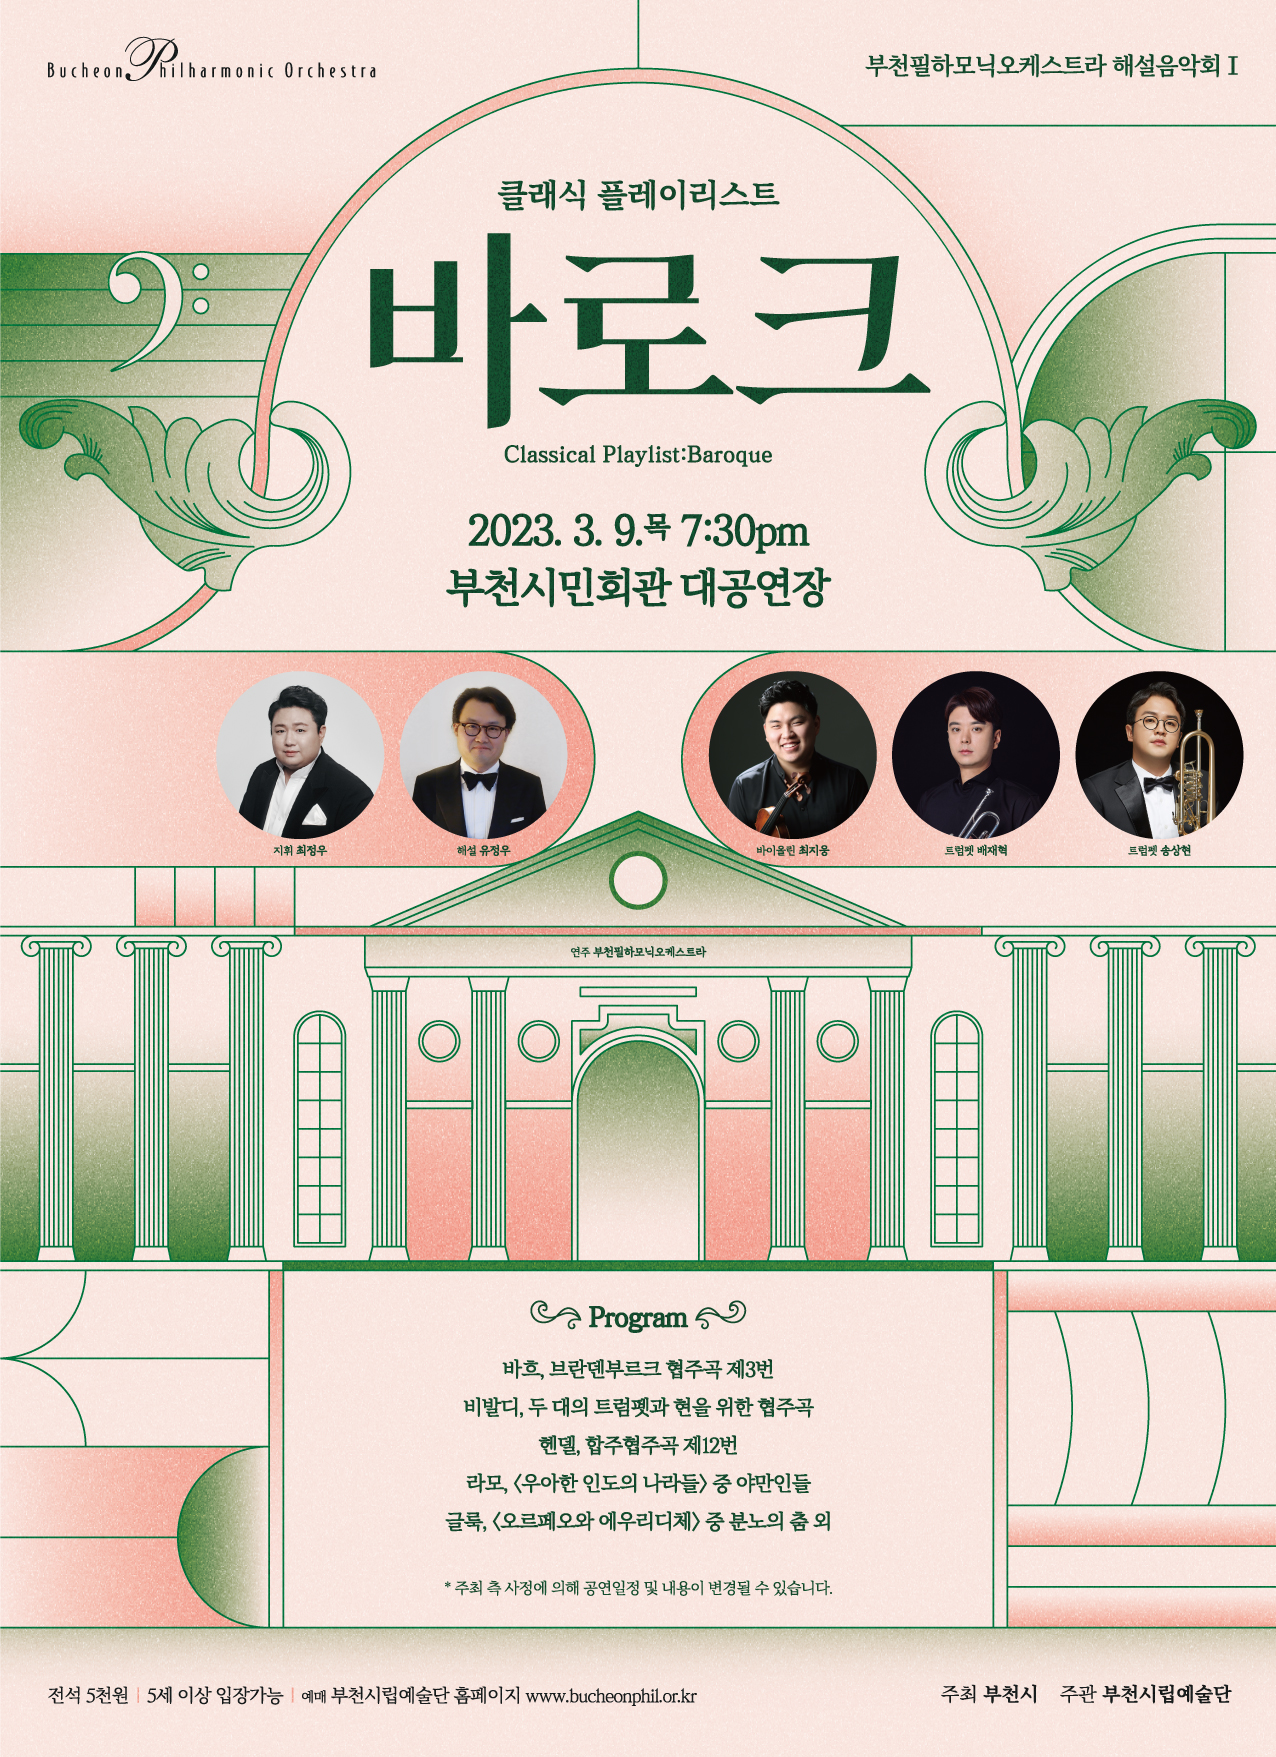 [3.9]Bucheon Philharmonic Orchestra Lecture ConcertⅠ- Classical Playlist 'Baroque'